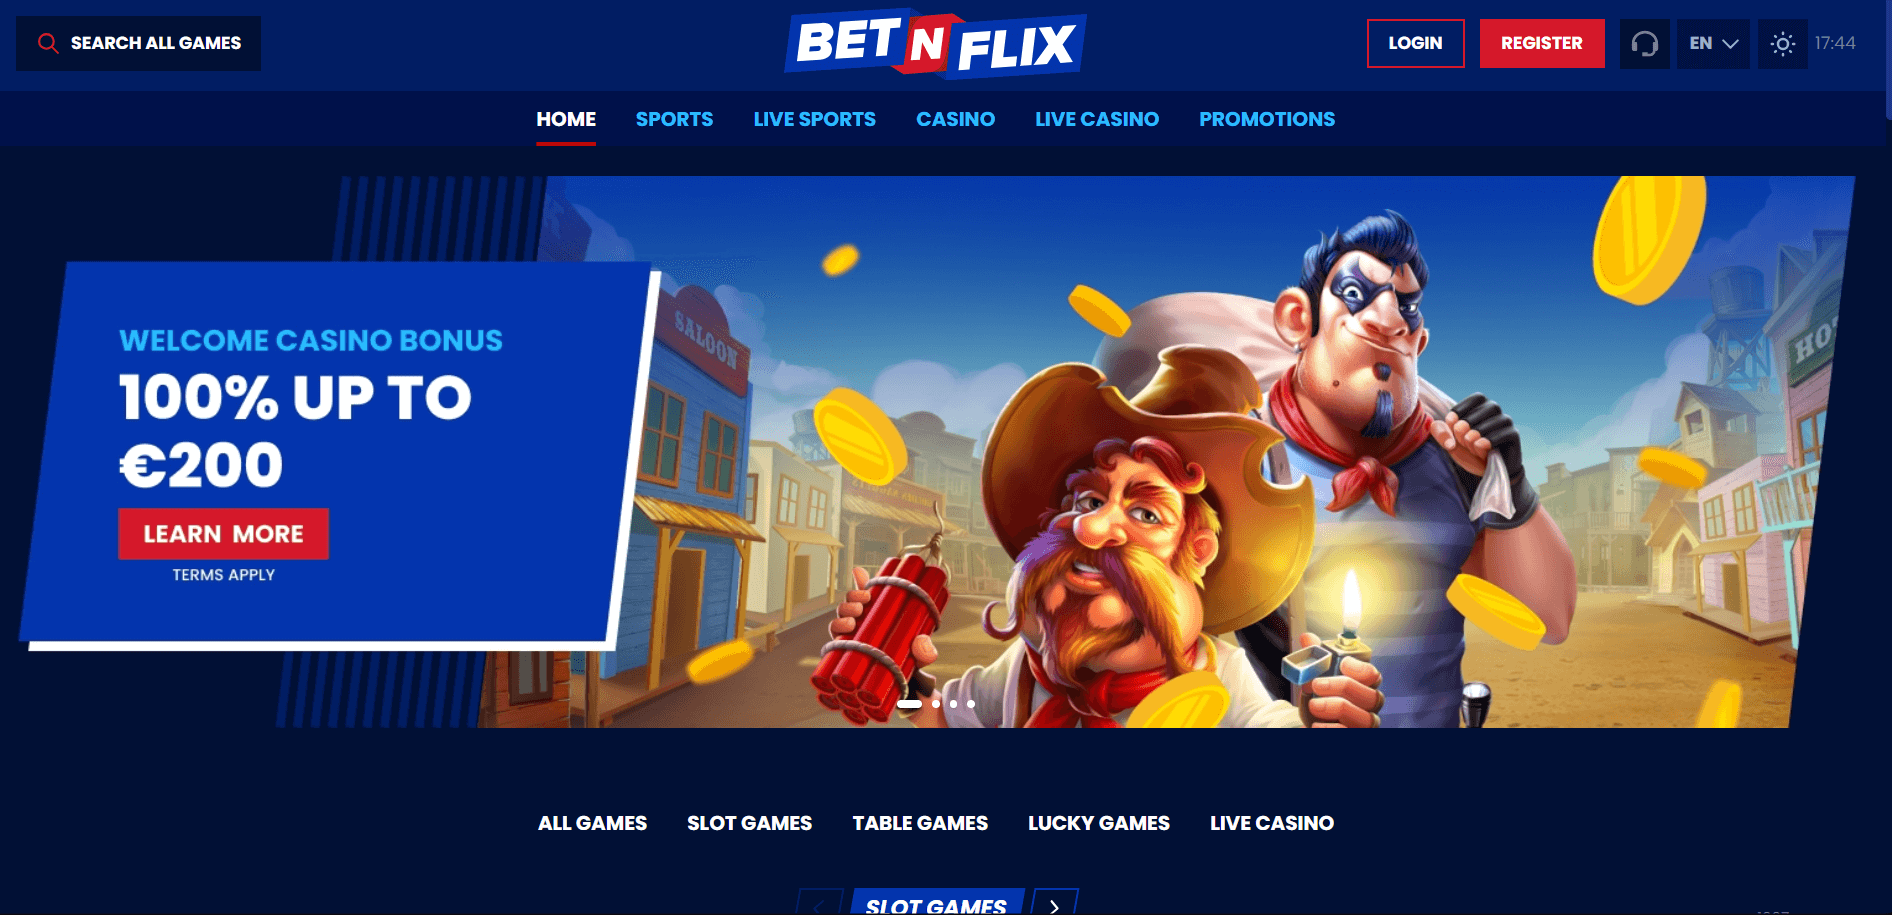 BetNFlix casino homepage